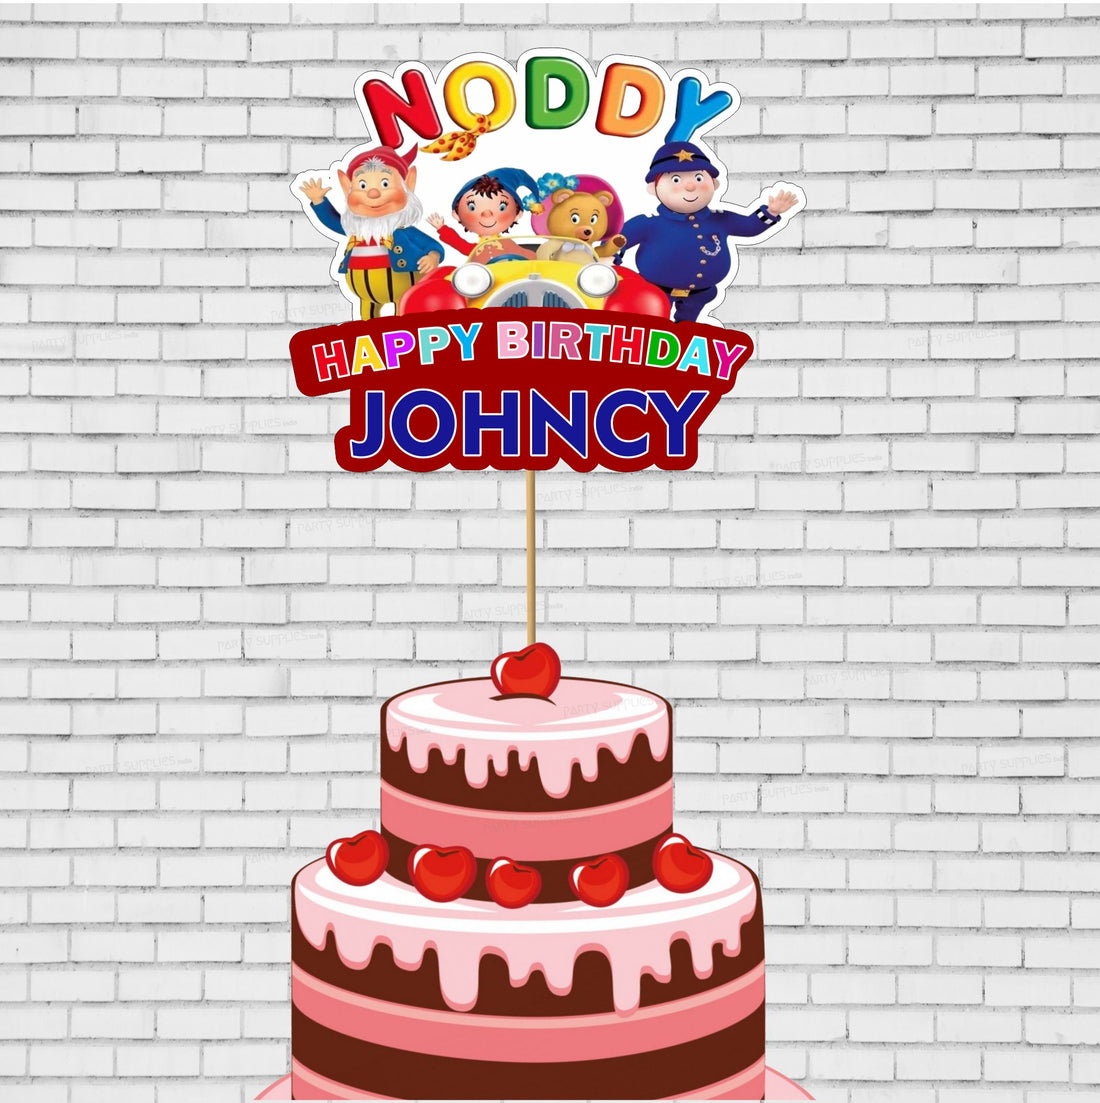 PSI Noddy Theme Cake Topper